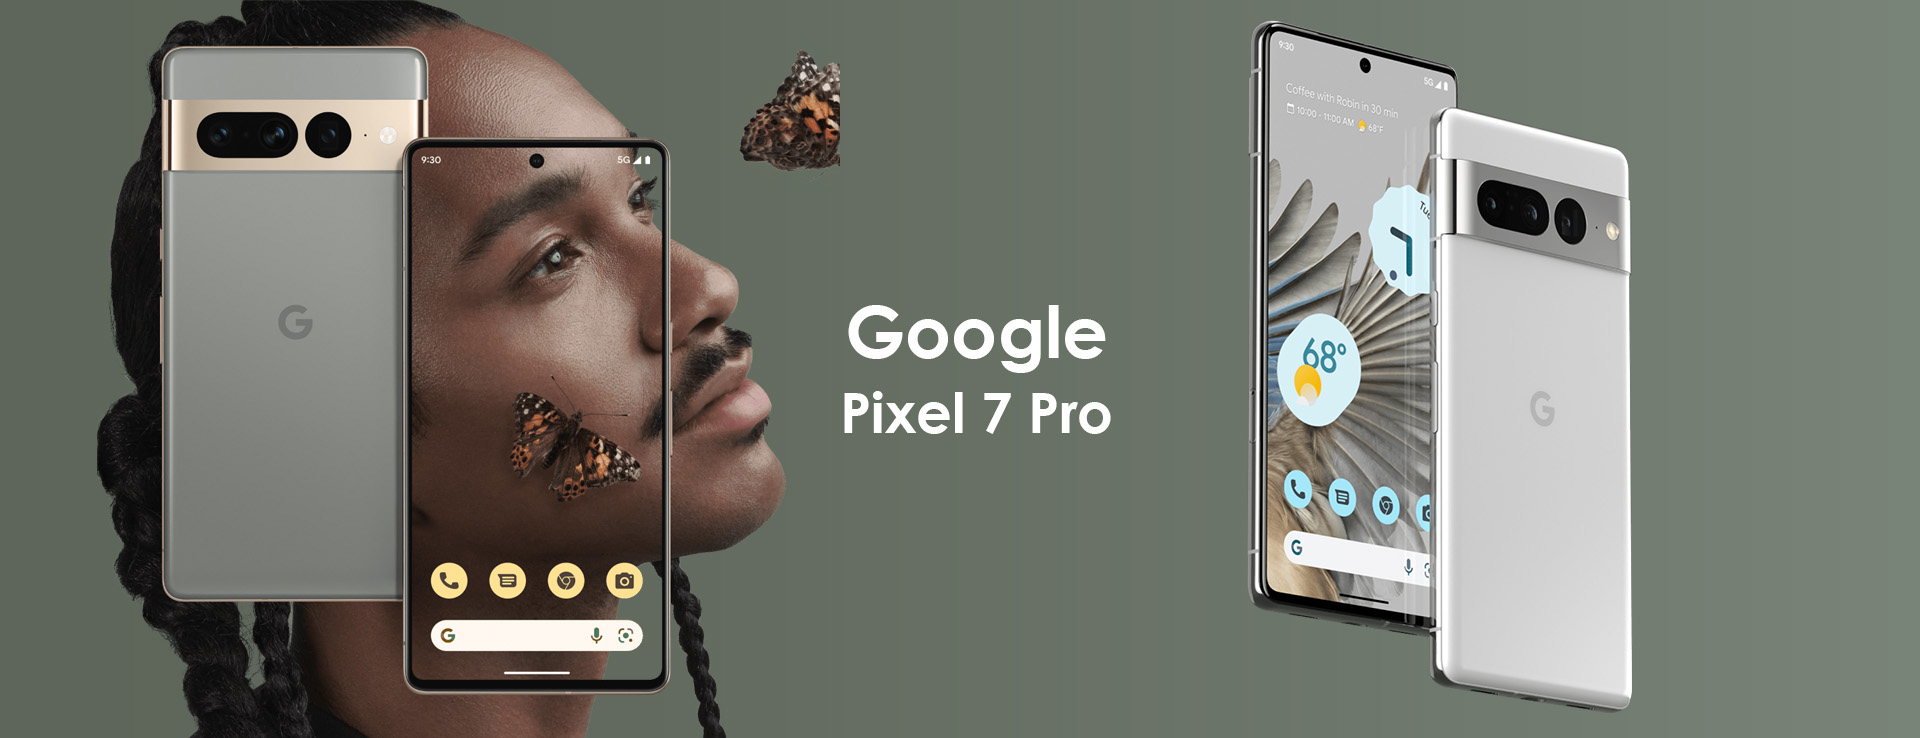 Google Pixel 7 Pro Snow